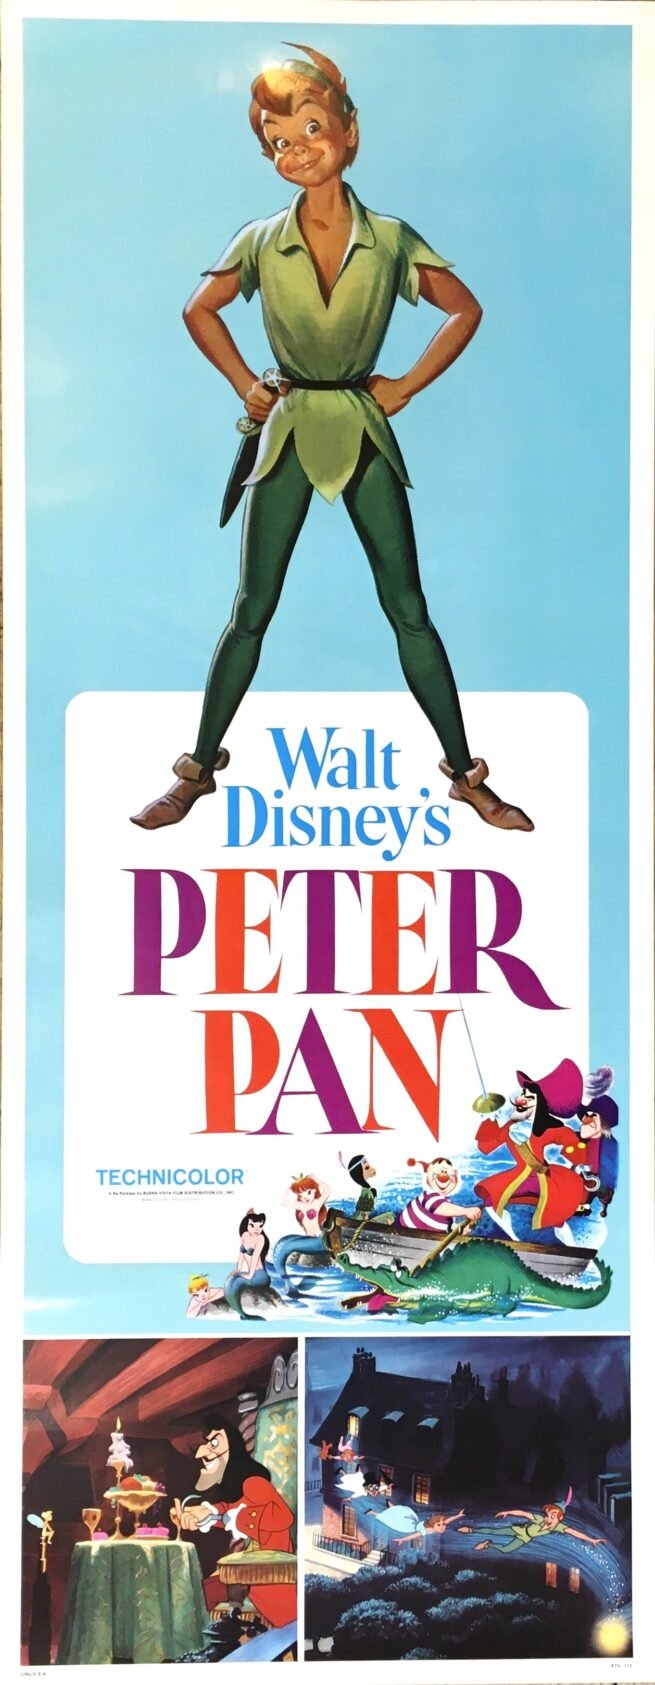 Original vintage cinema movie poster for the Disney classic, Peter Pan